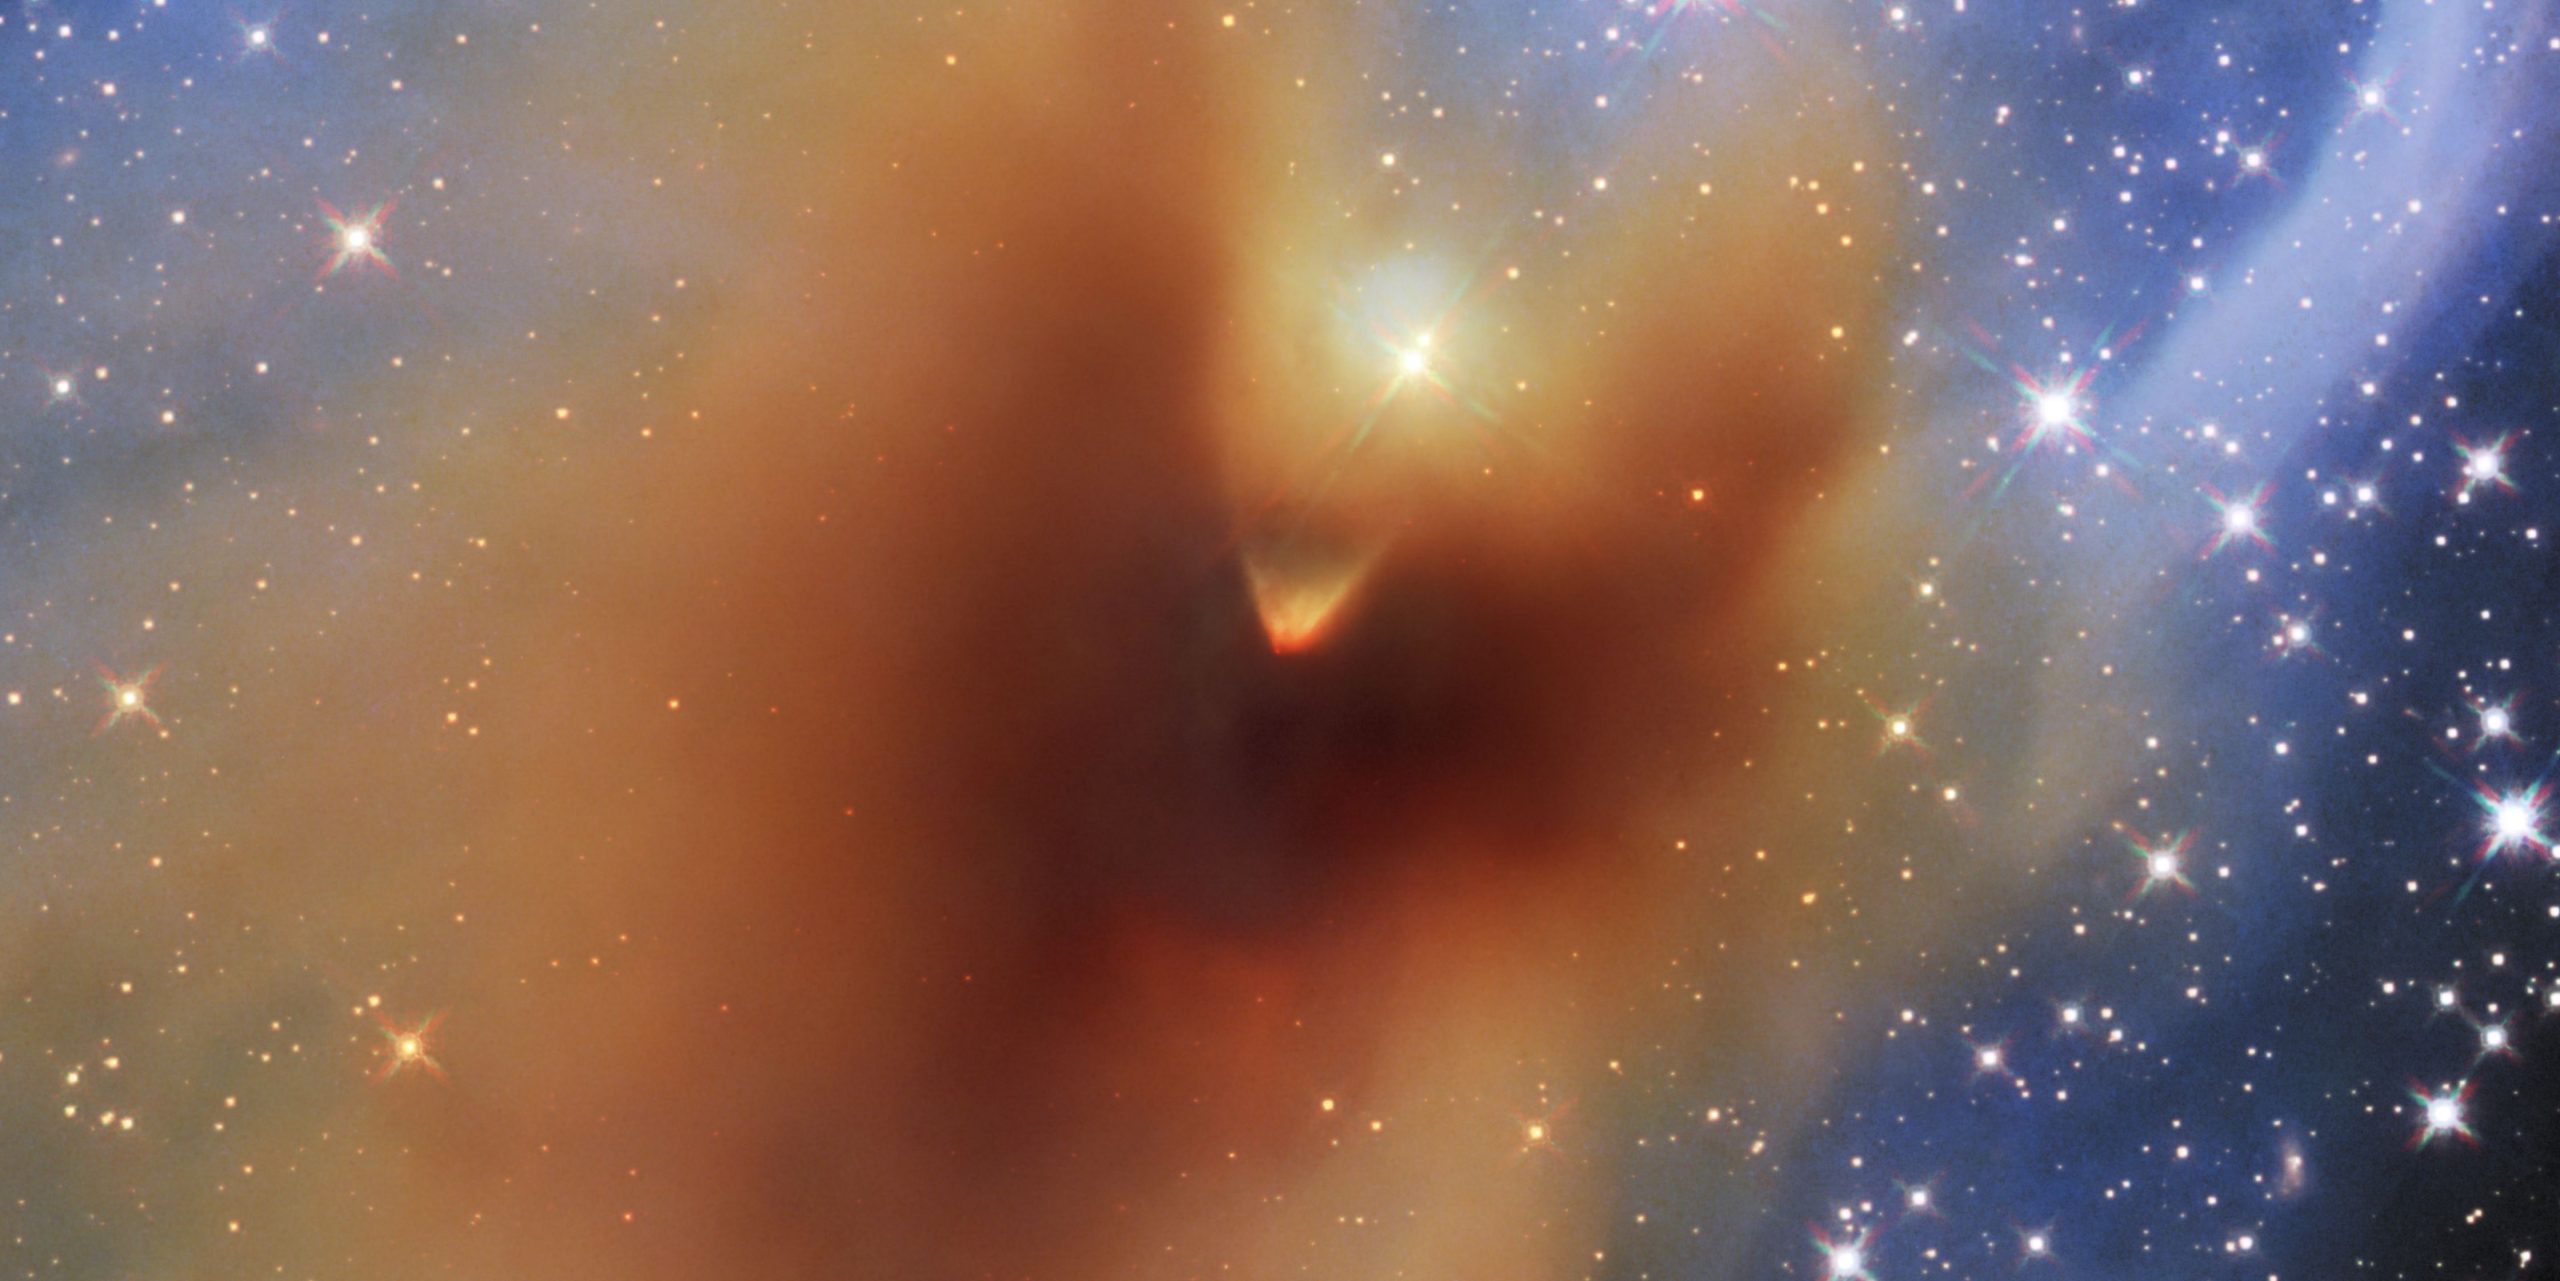 A cropped photograph of Hubbles view of CB 130-3. Image credit: ESA/Hubble, NASA & STScI, C. Britt, T. Huard, A. Pagan.